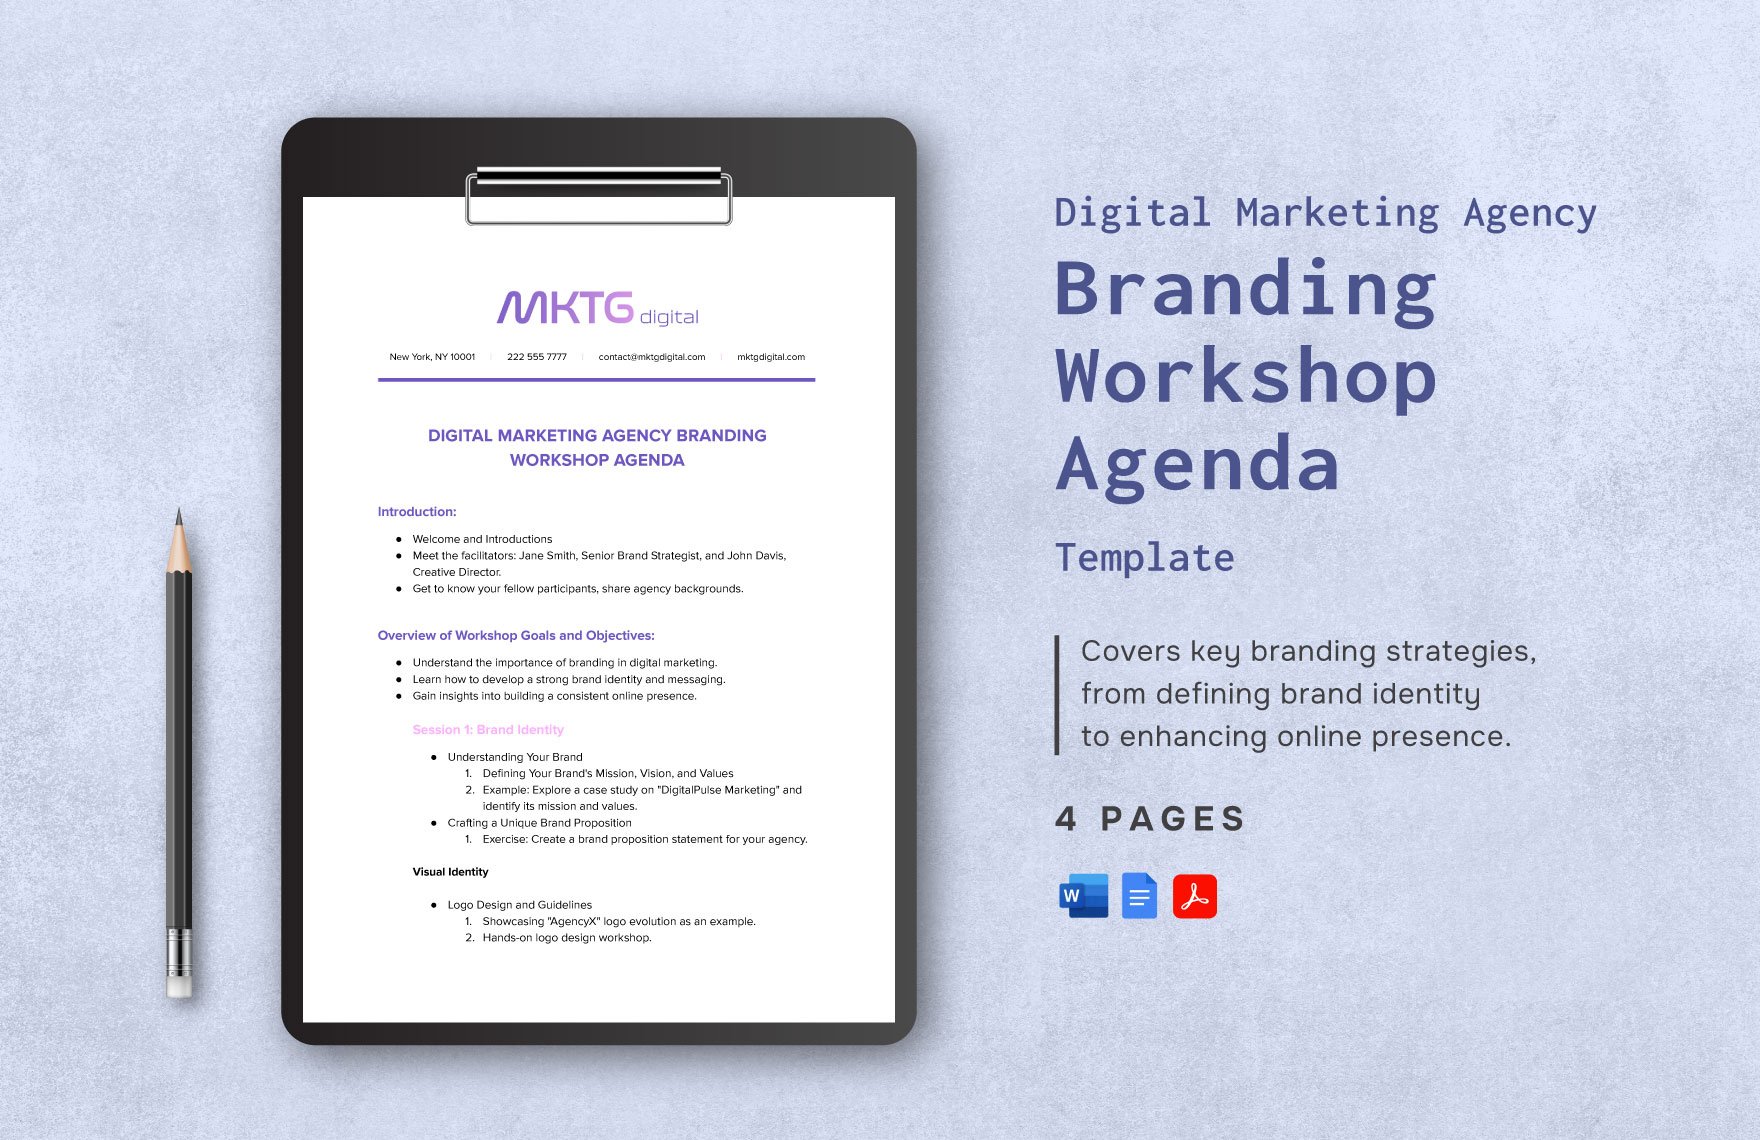 Digital Marketing Agency Branding Workshop Agenda Template